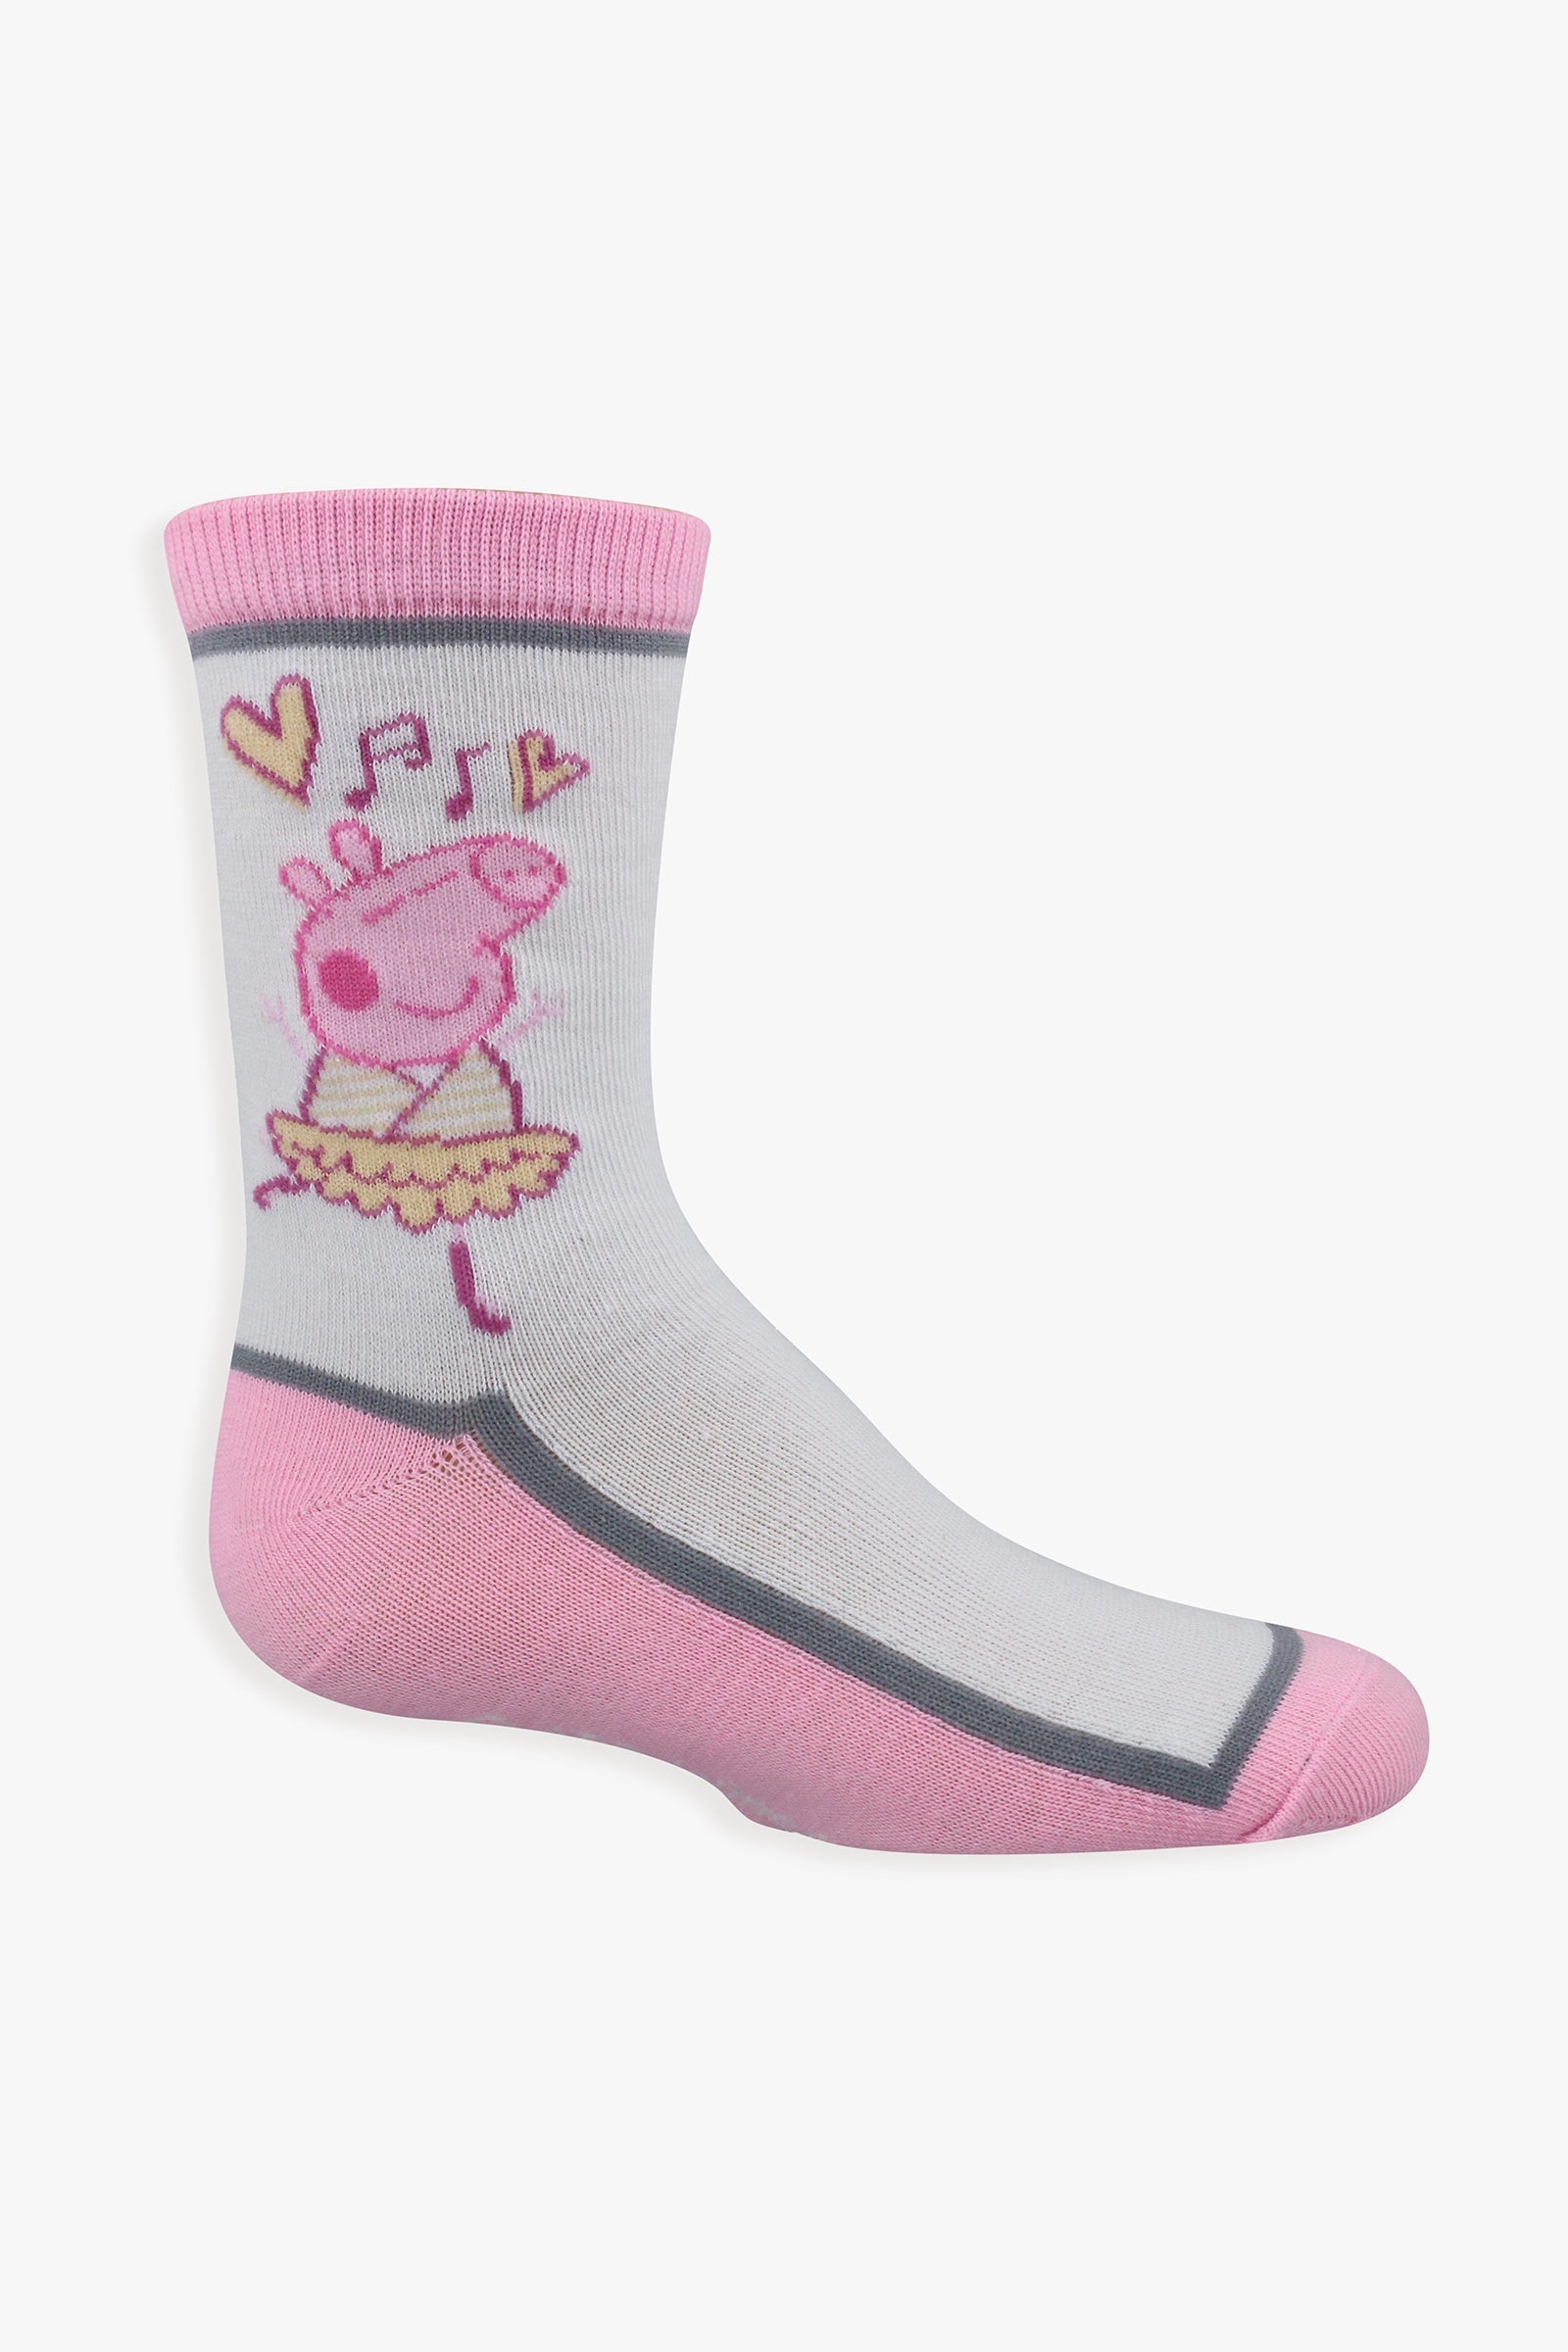 Gertex Peppa Pig Youth Girls 3-Pack Crew Socks